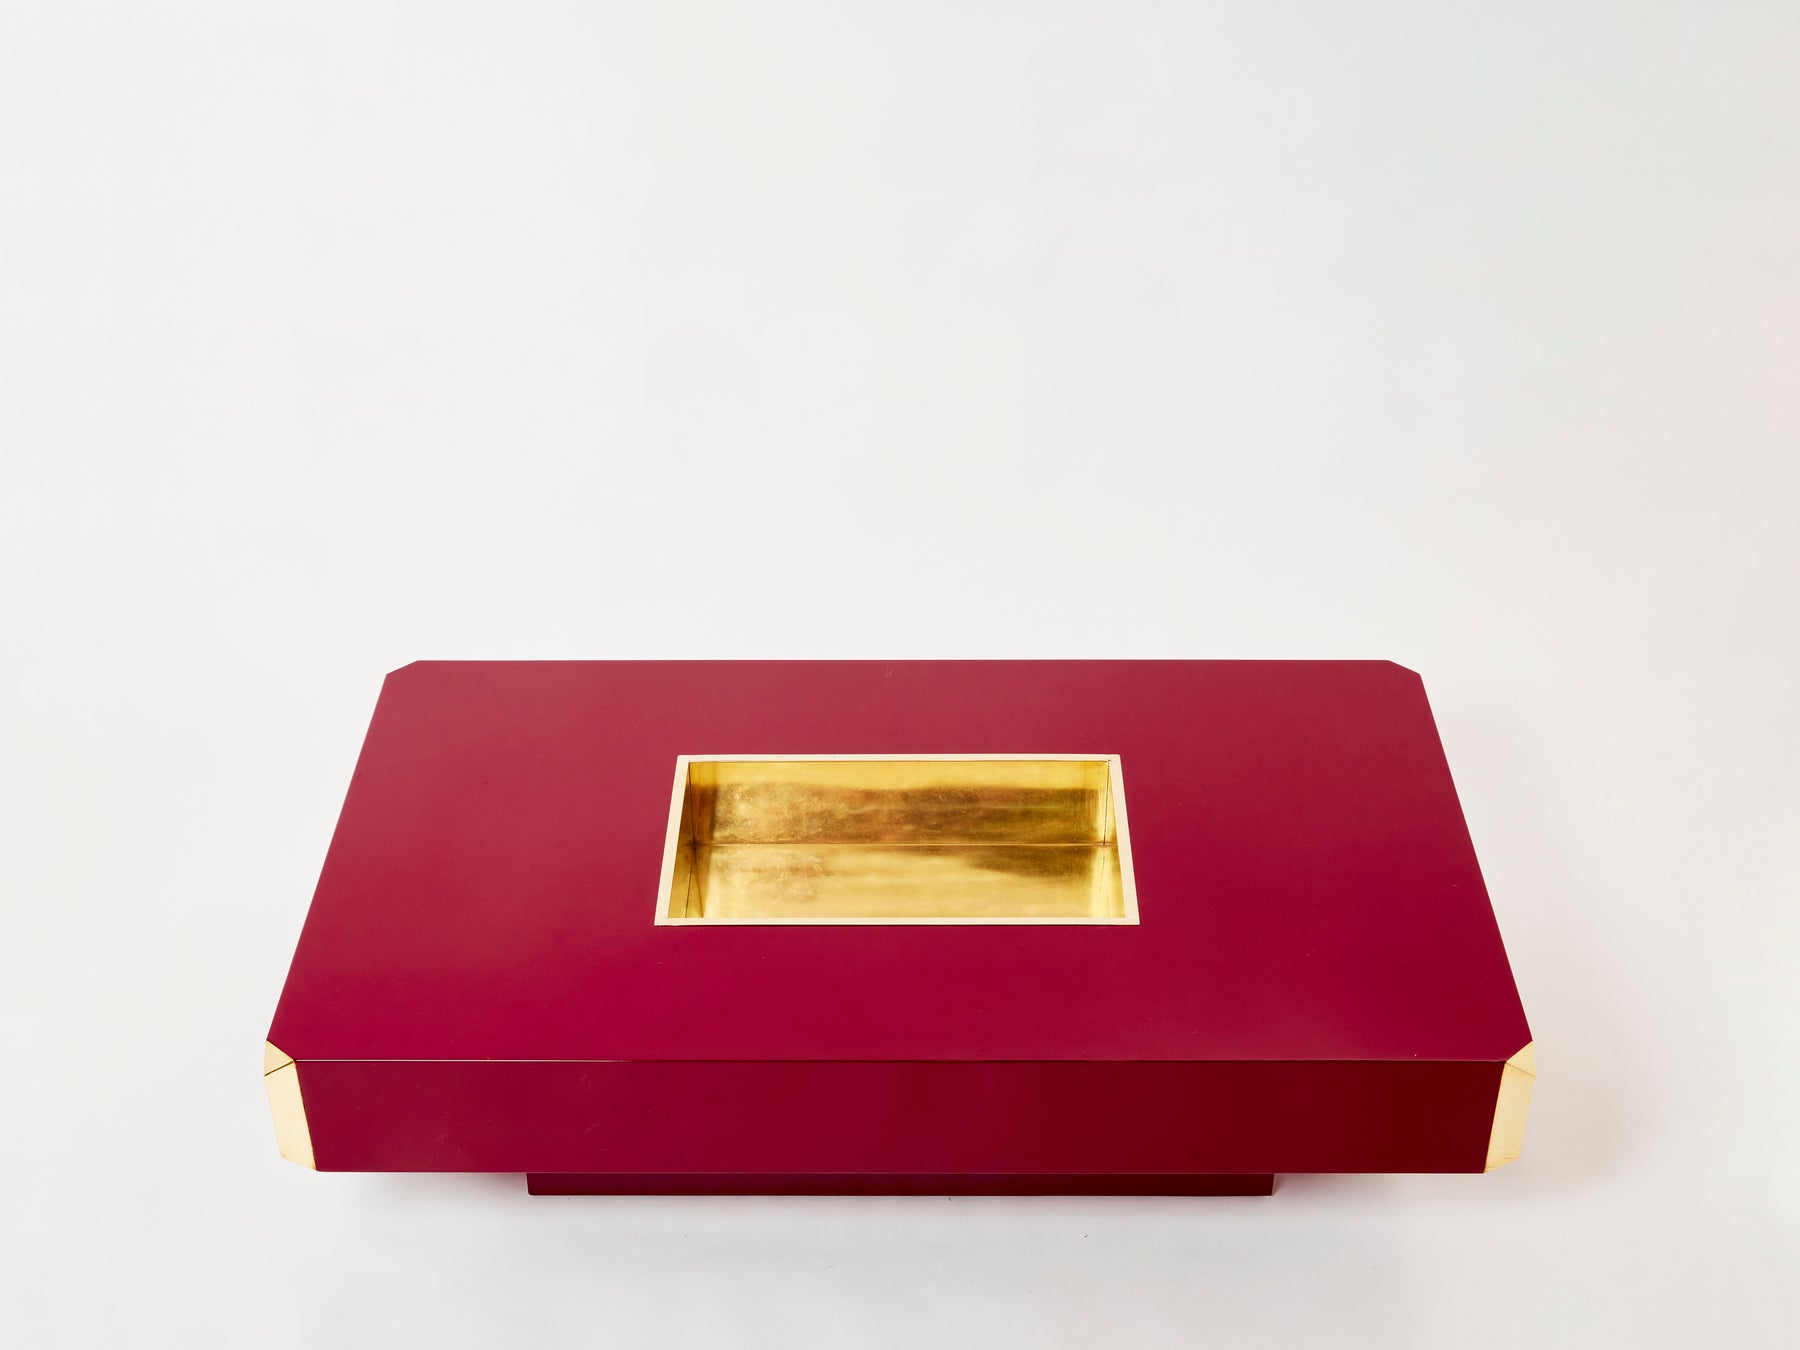 Table basse de Willy Rizzo modèle Alveo laquée rouge laiton 1970 